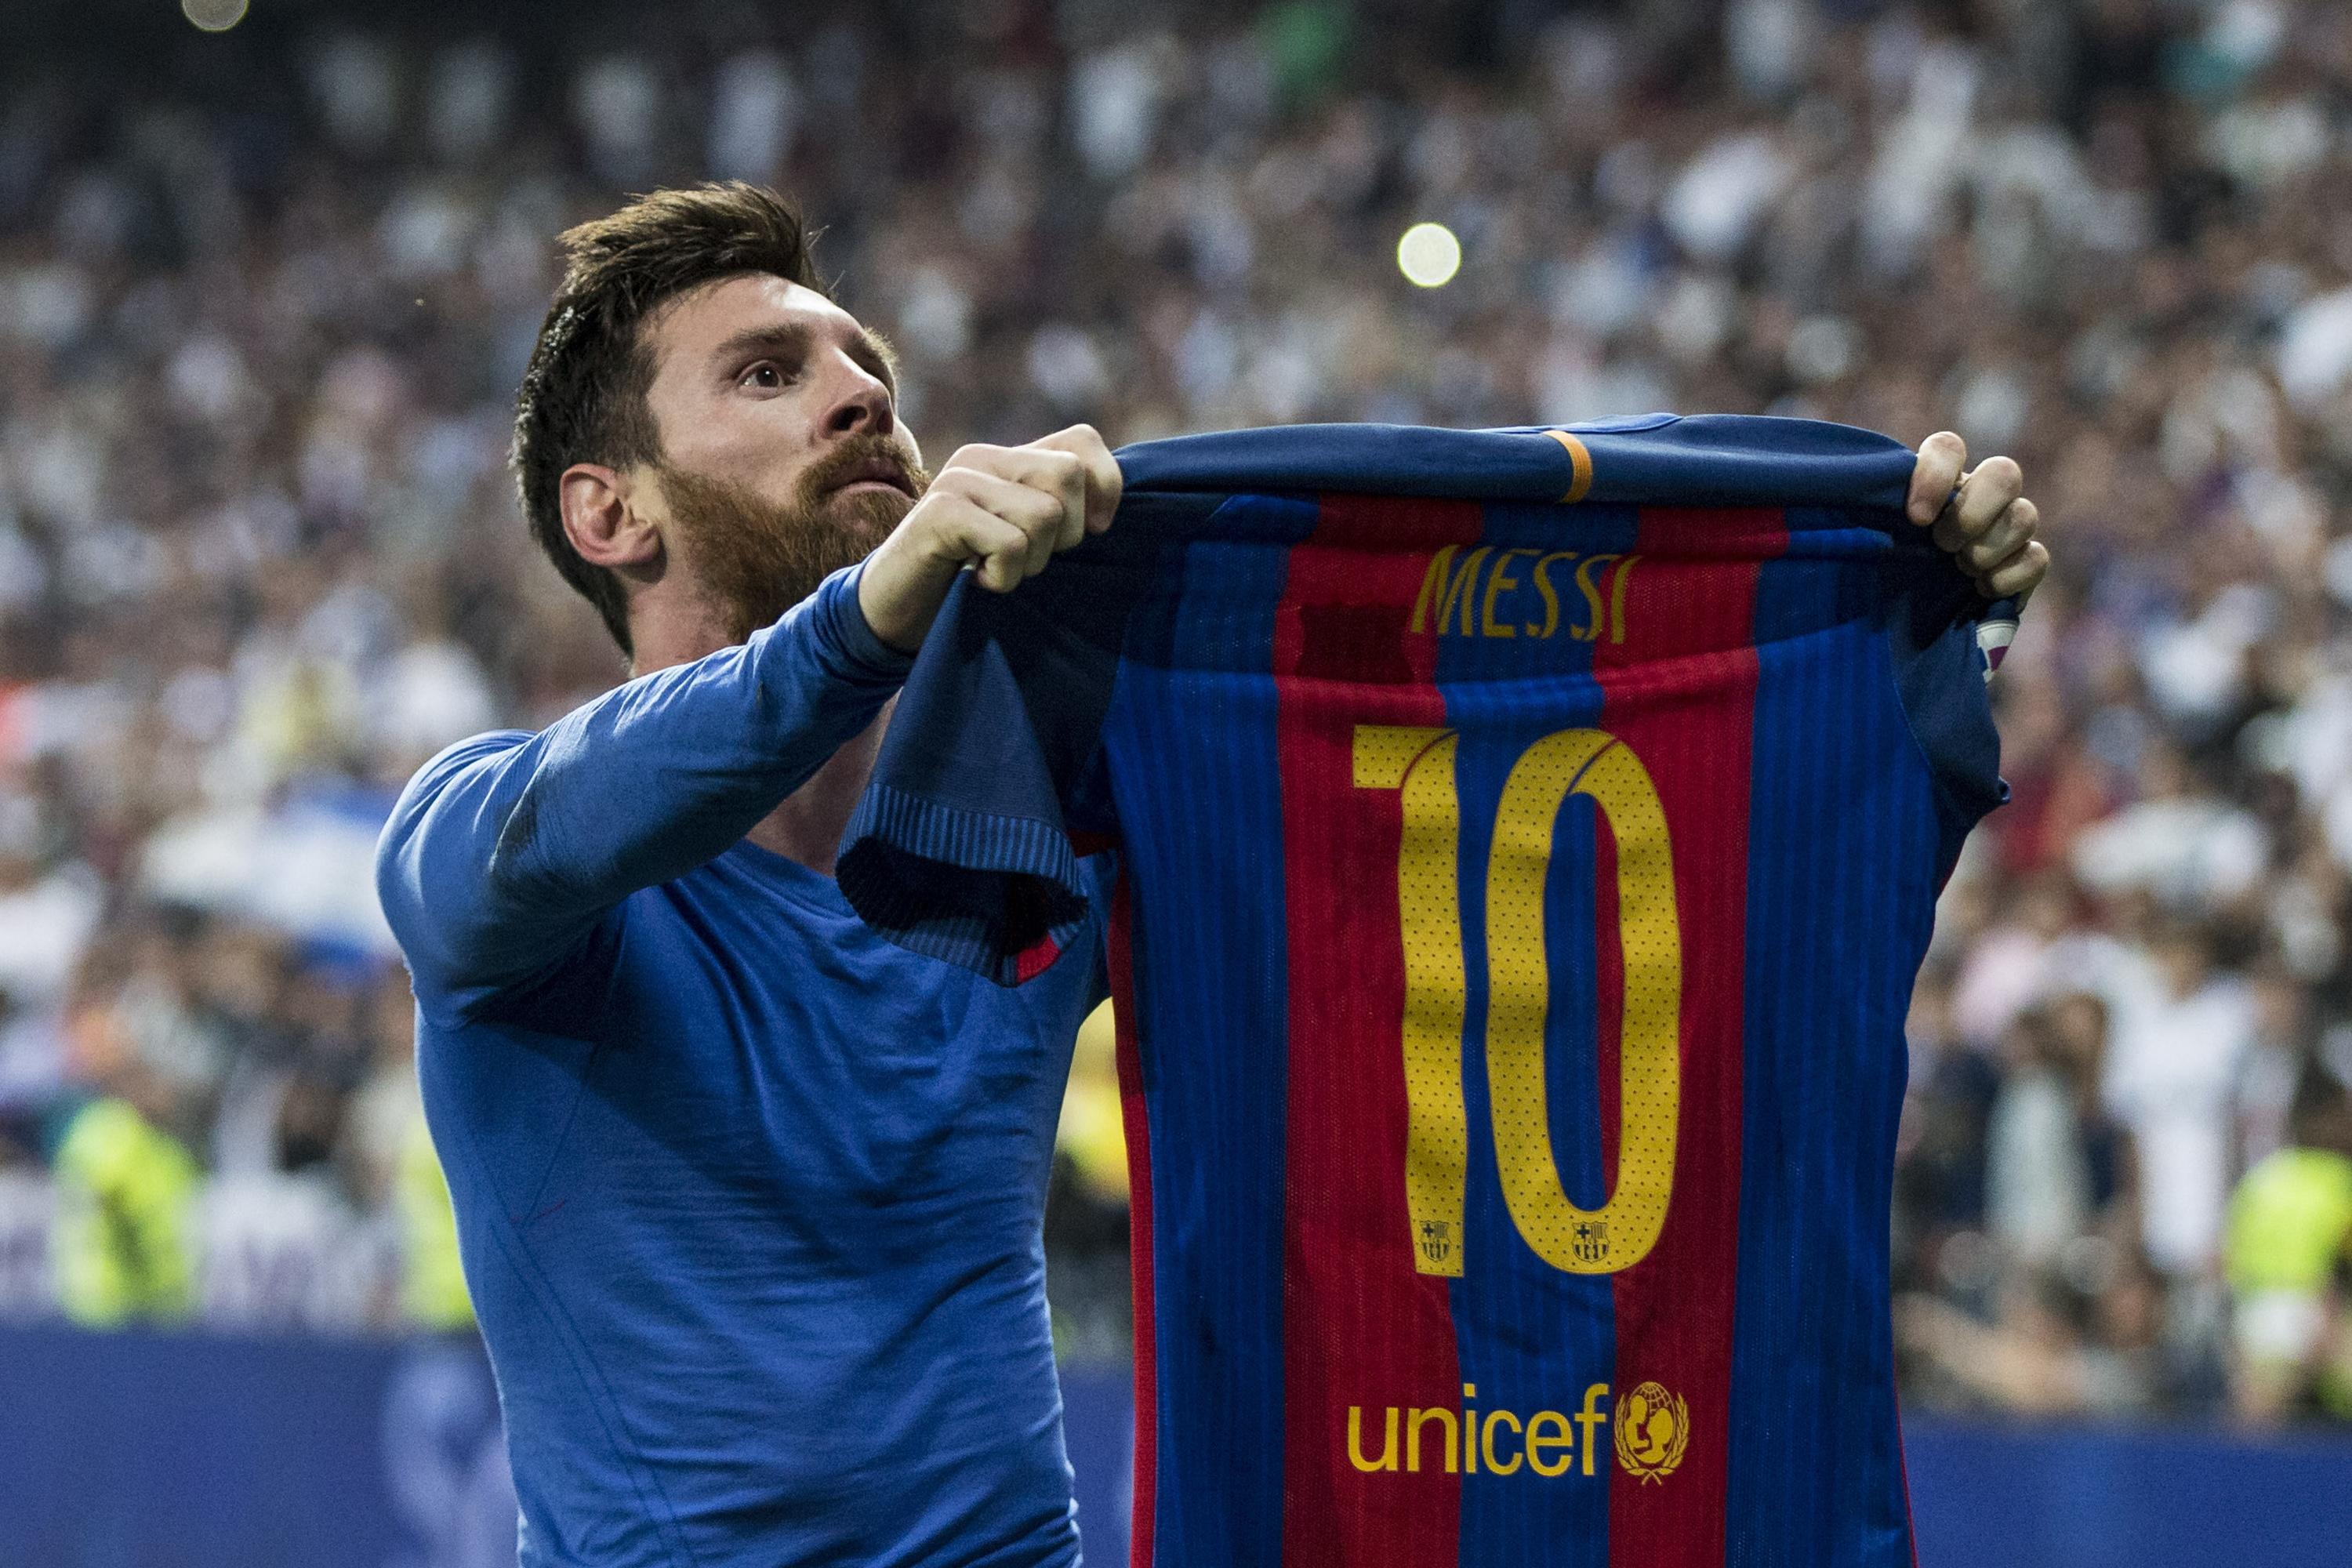 Lionel Messi hat trick in first half for Barcelona vs. Eibar